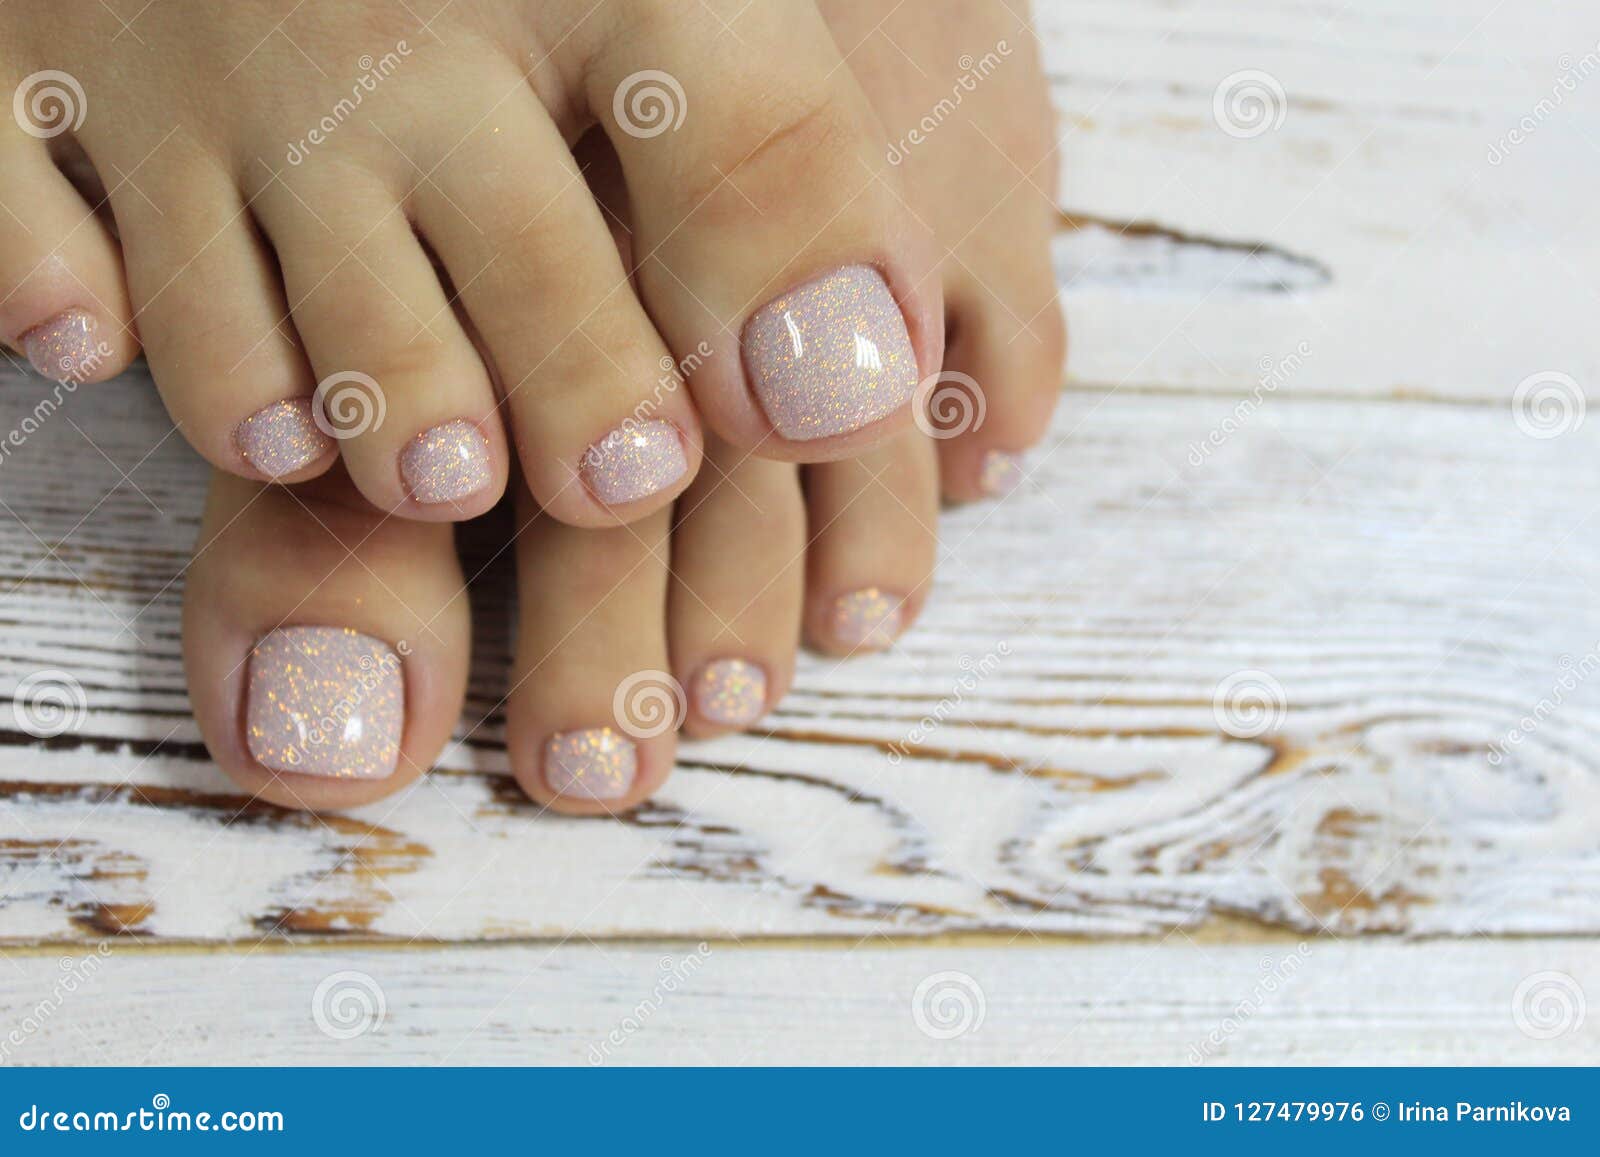 Aetomce 24pcs Press on Toenails for Women Red Glossy False Nail for Toe  Full Cover Bling Fake Toenail Fashion Nails Artifical Toenails Acrylic Foot  Nail Tips - Walmart.com